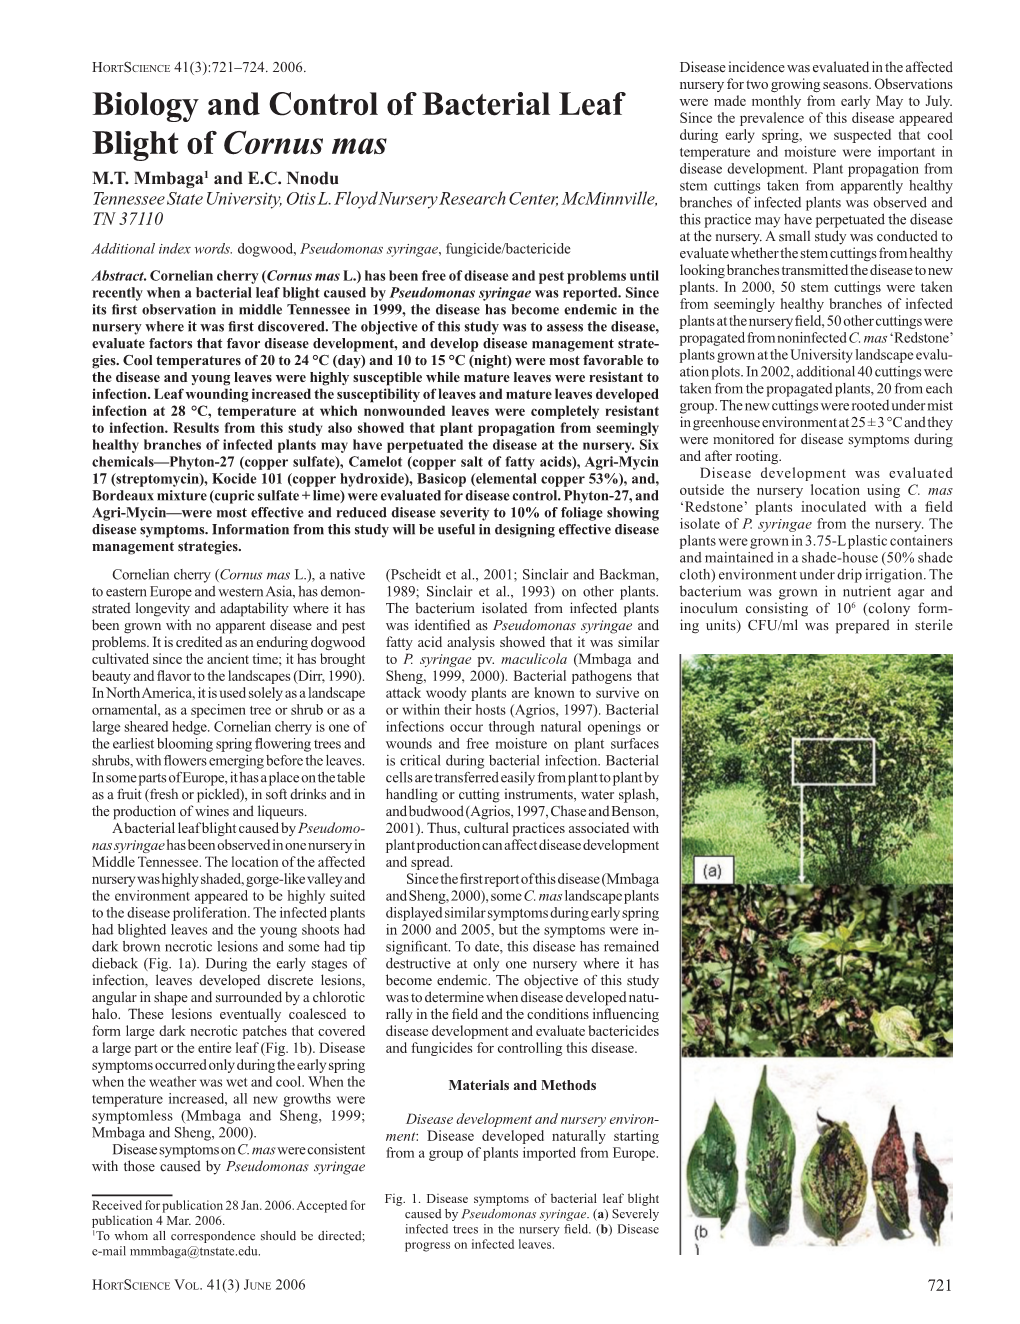 Biology and Control of Bacterial Leaf Blight of Cornus